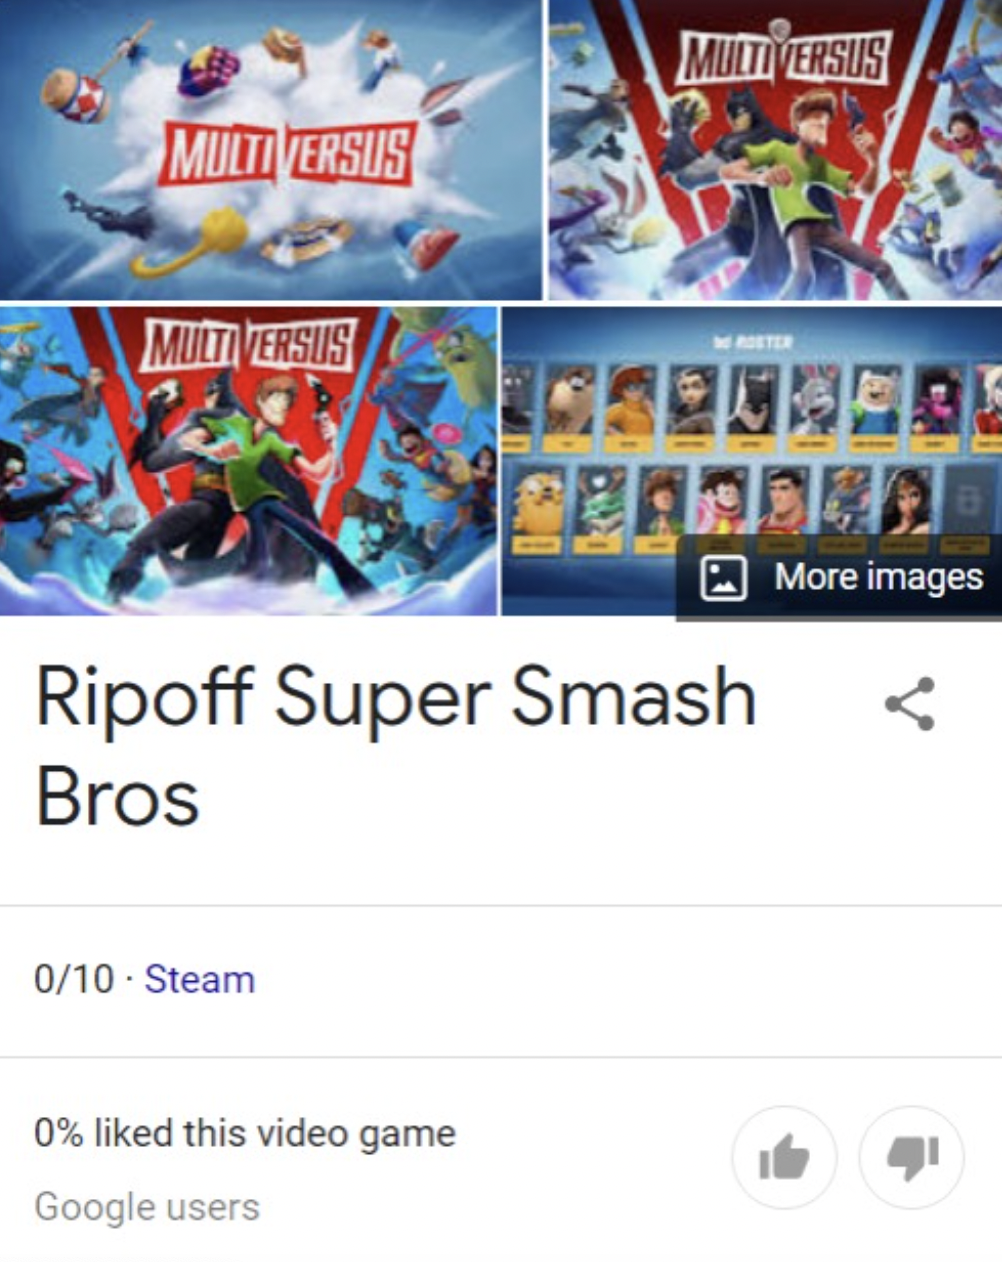 Gaming memes - graphic design - Multiversus Multiversus Ripoff Super Smash Bros 010Steam Multiversus 0% d this video game Google users More images